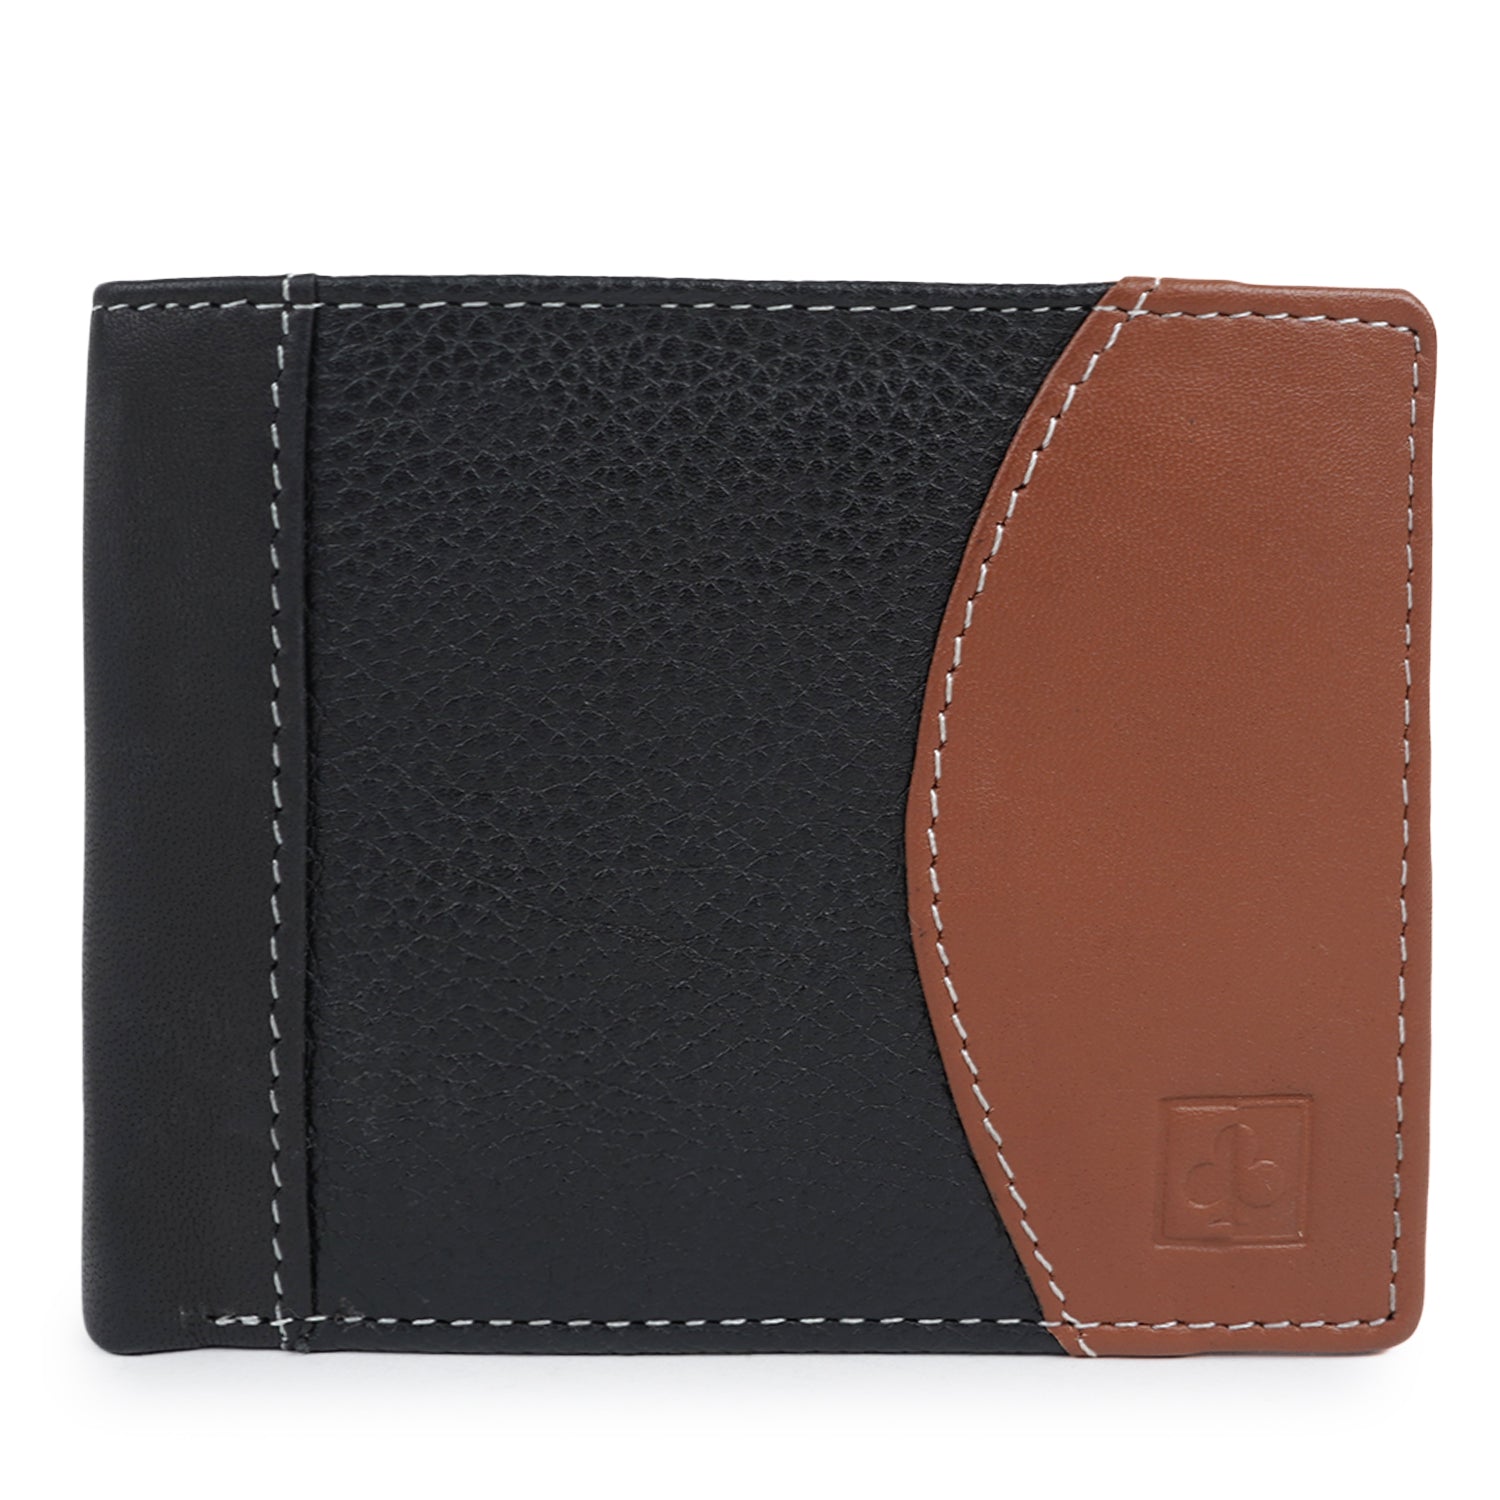 CIMONI Genuine Leather Casual Slim Multi Credit Cards Slot RFID Wallet for Men